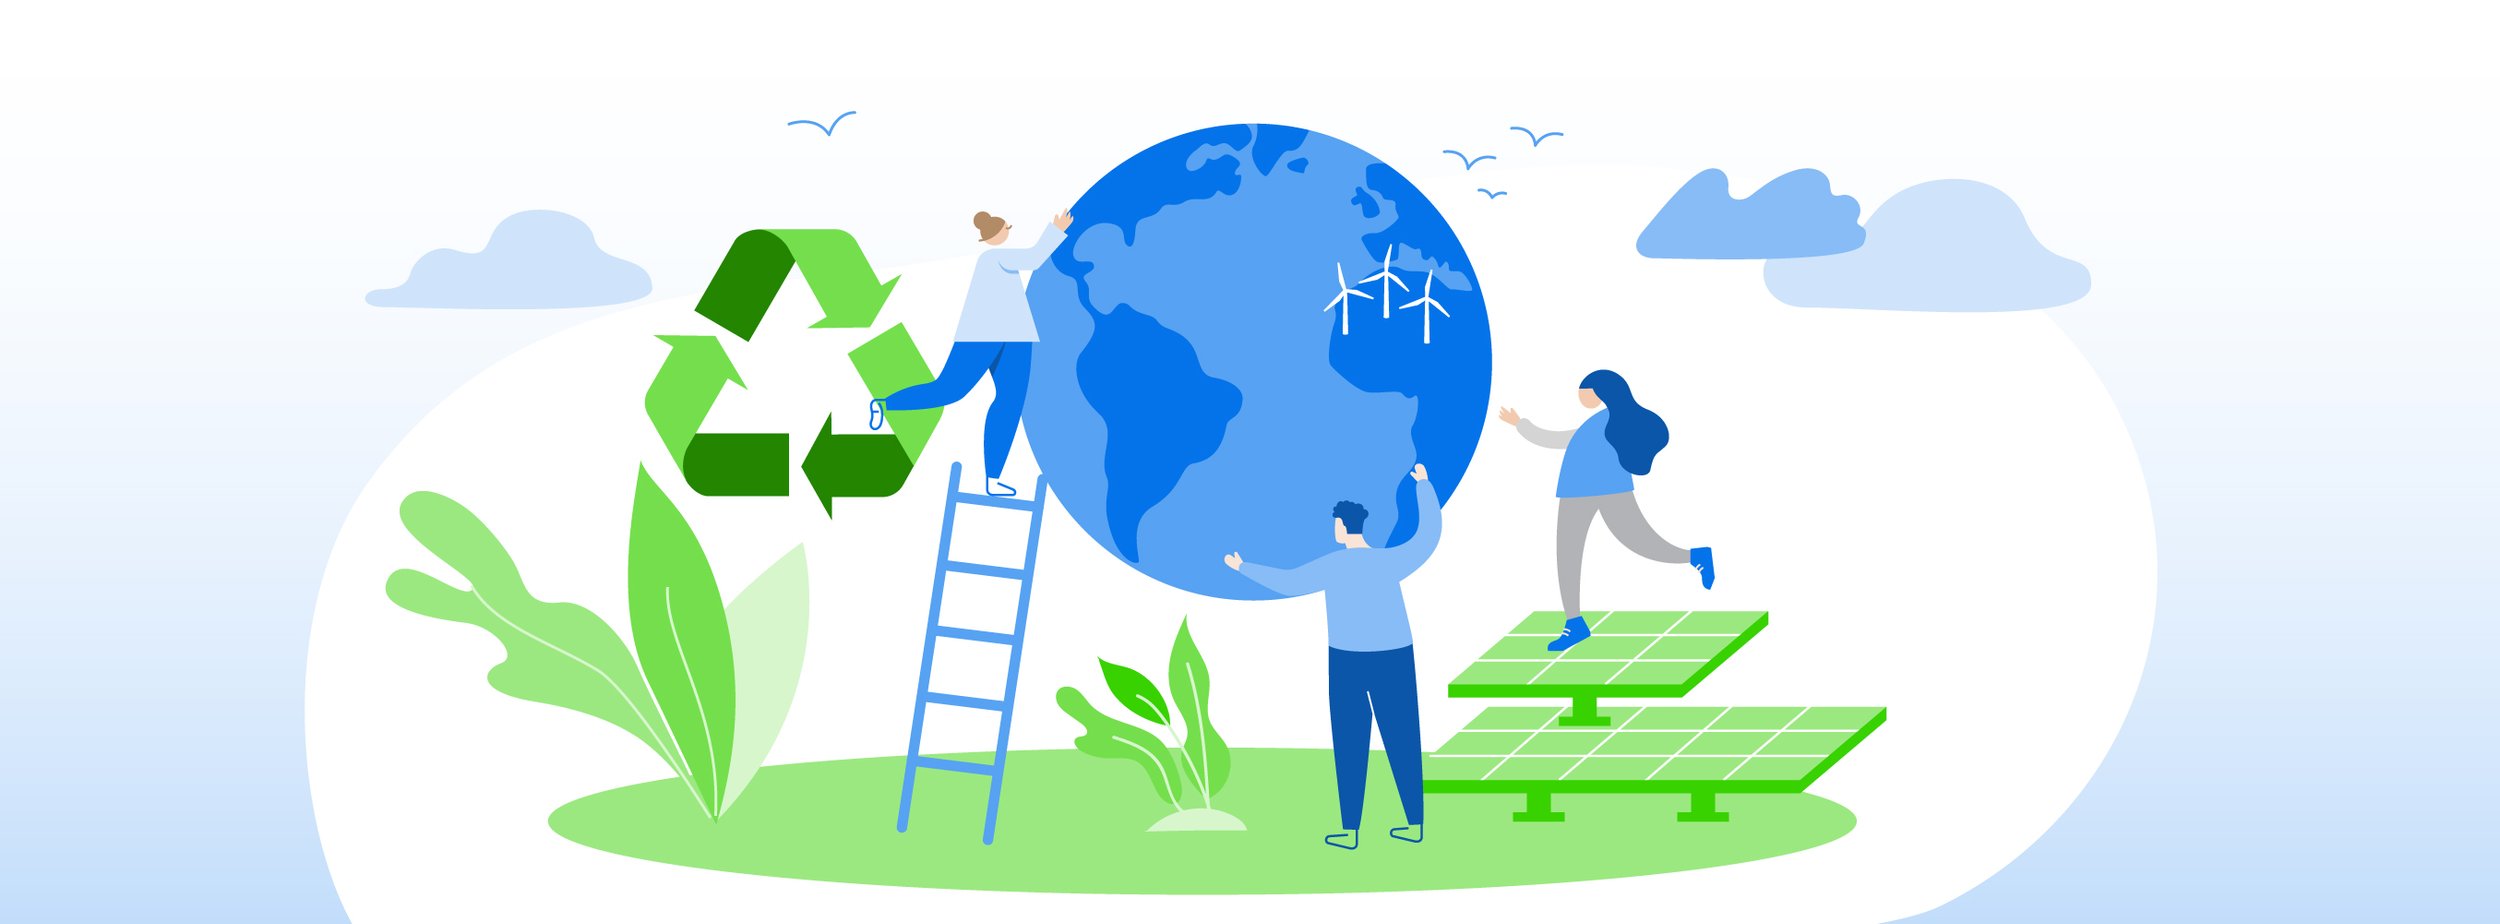 SC_illustration_banner_Sustainability.jpg